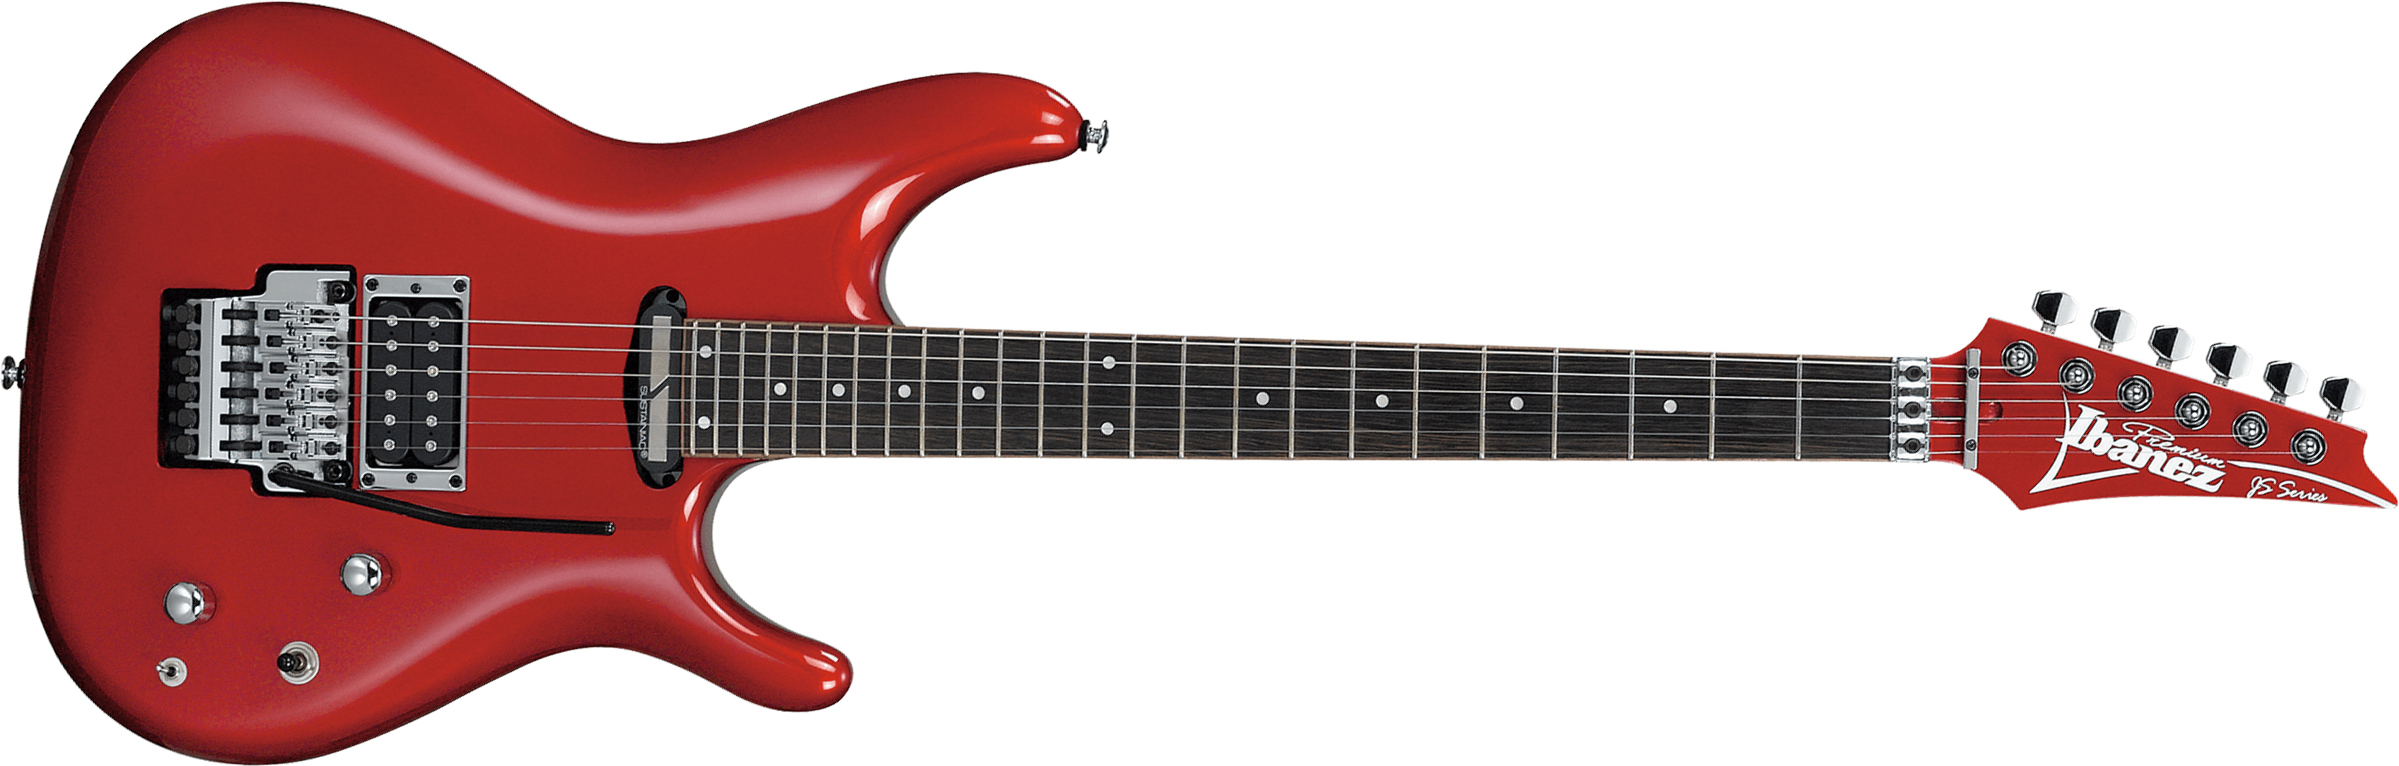 Ibanez Joe Satriani Js240ps Ca Signature Hst Dimarzio Sustainiac Fr Pp - Candy Apple - Str shape electric guitar - Main picture